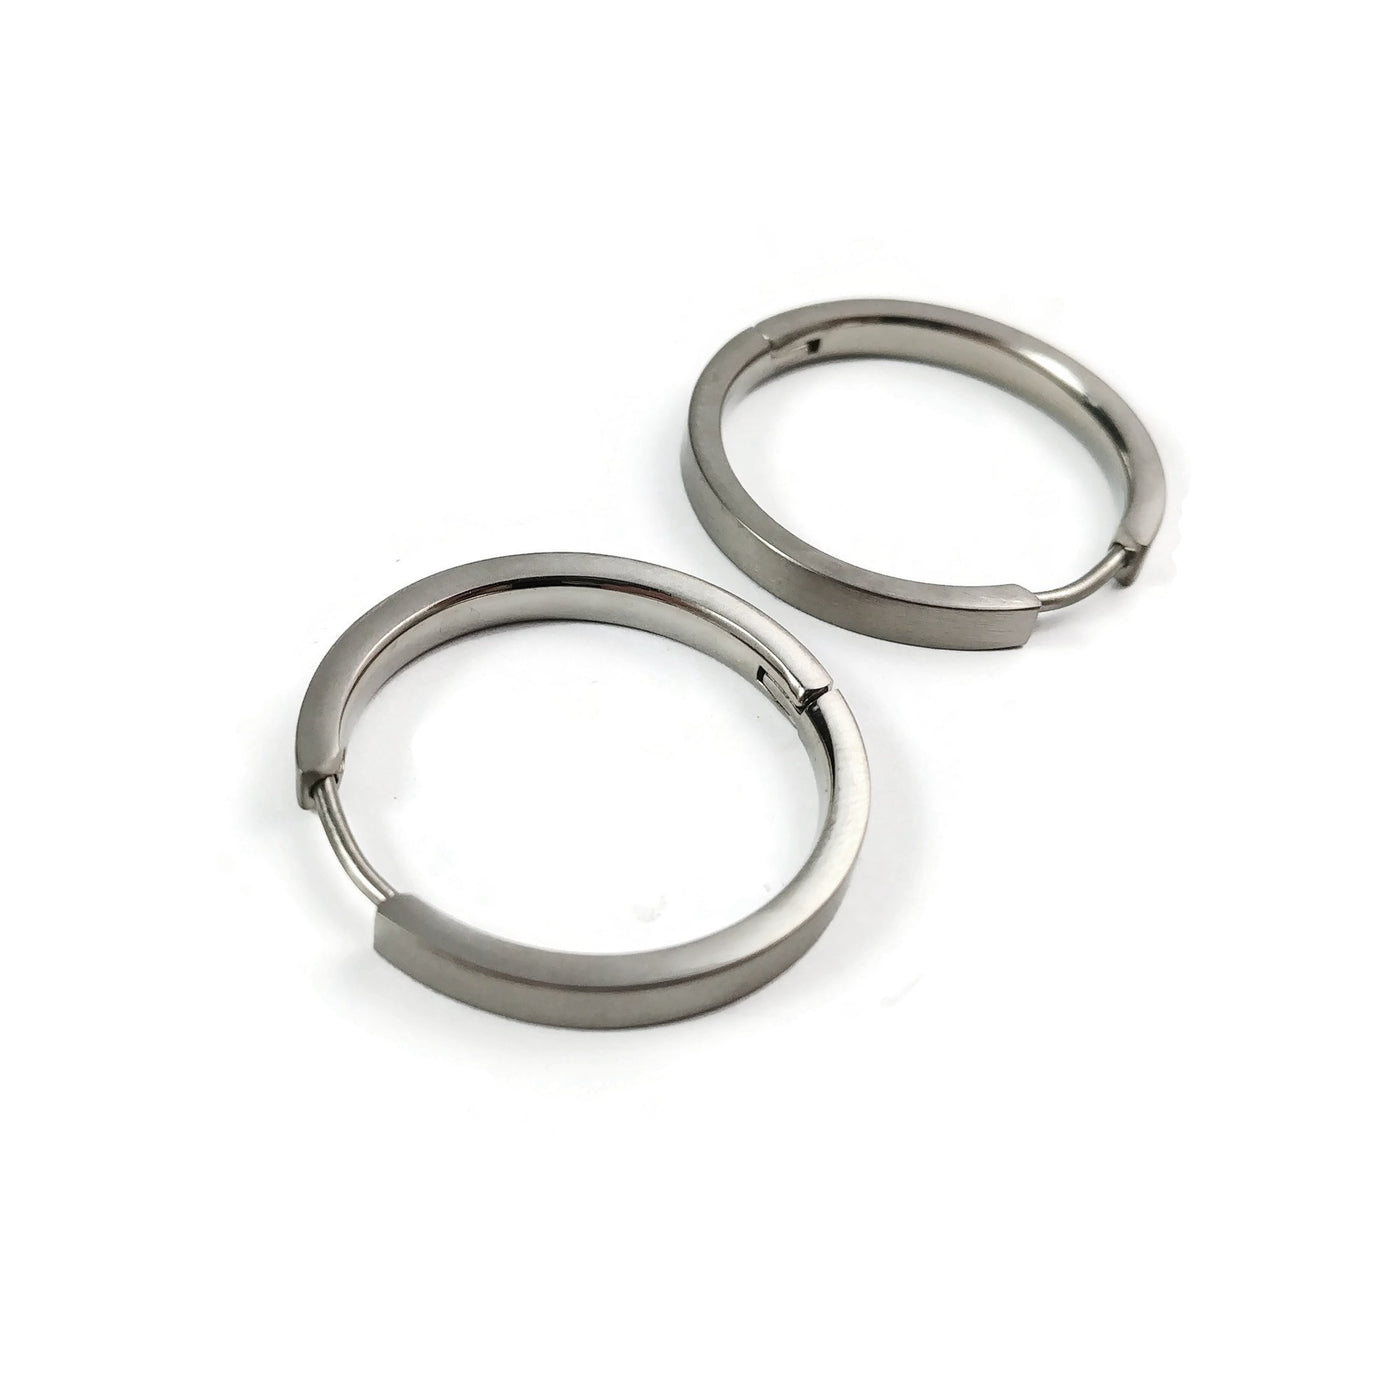 24mm natural pure titanium hoop earrings, 100% Hypoallergenic, Sensitive ear